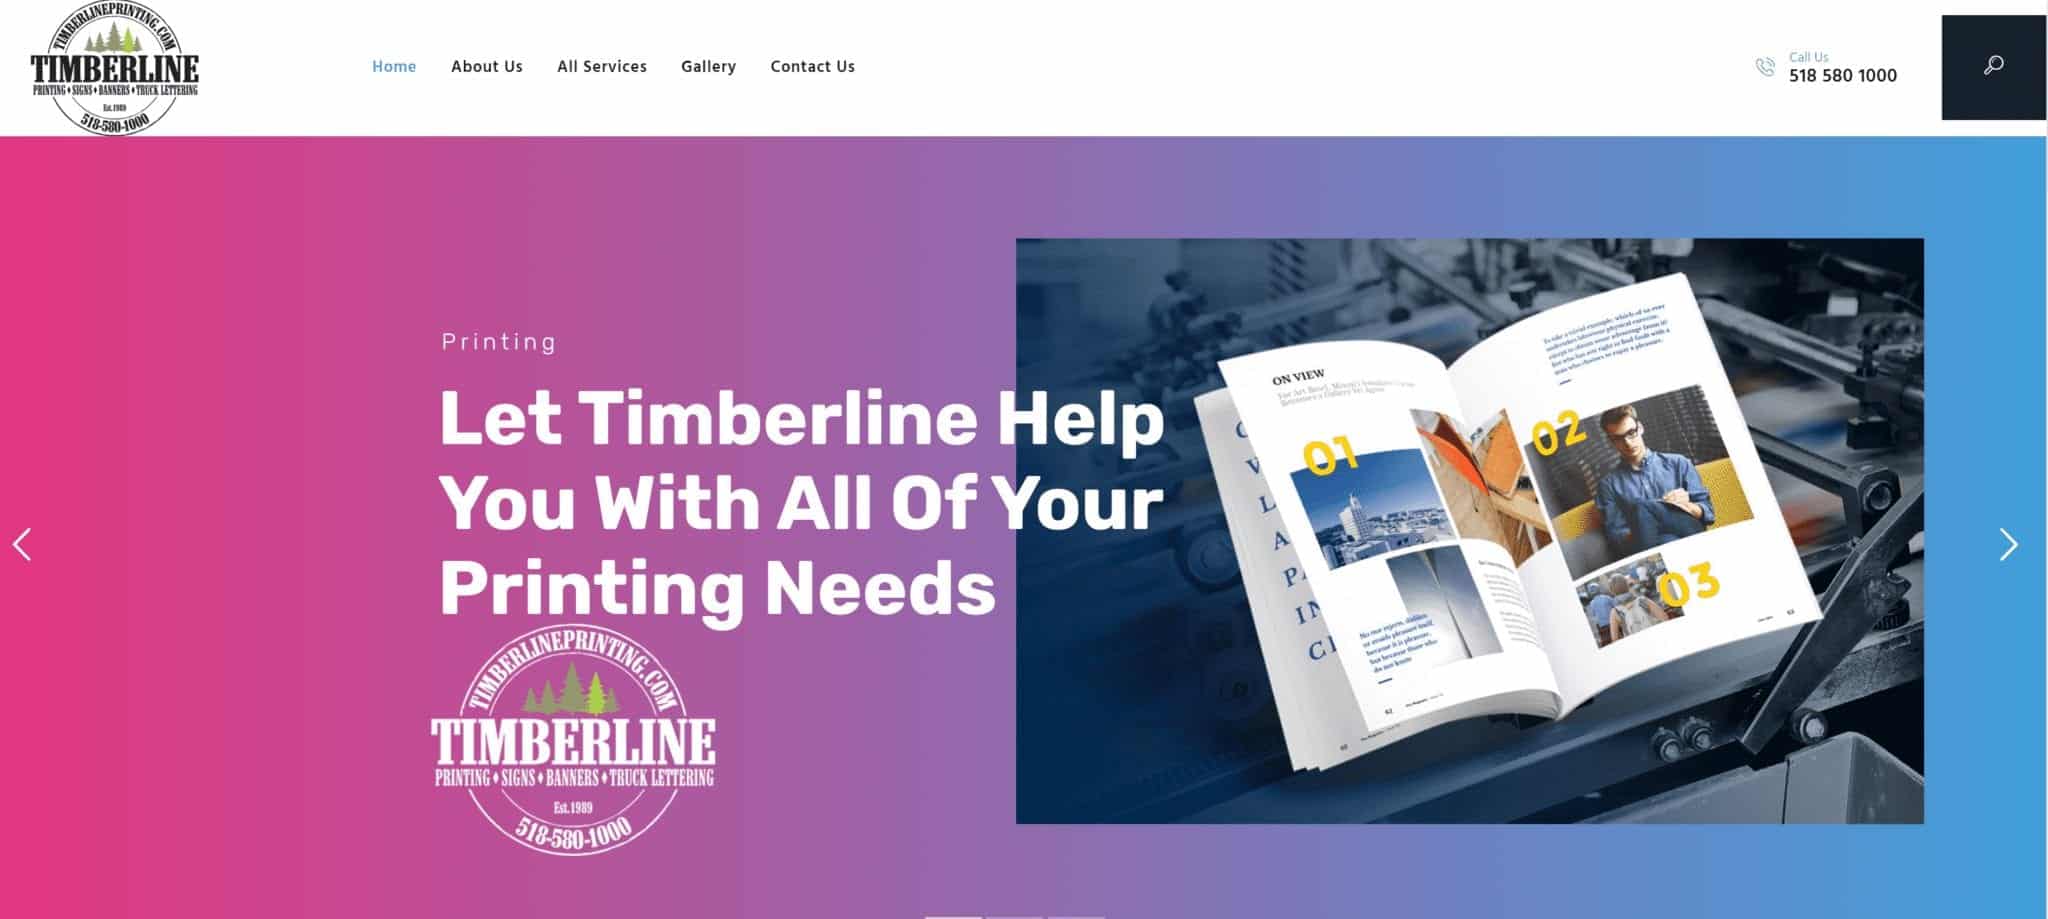 Timberline website screen shot